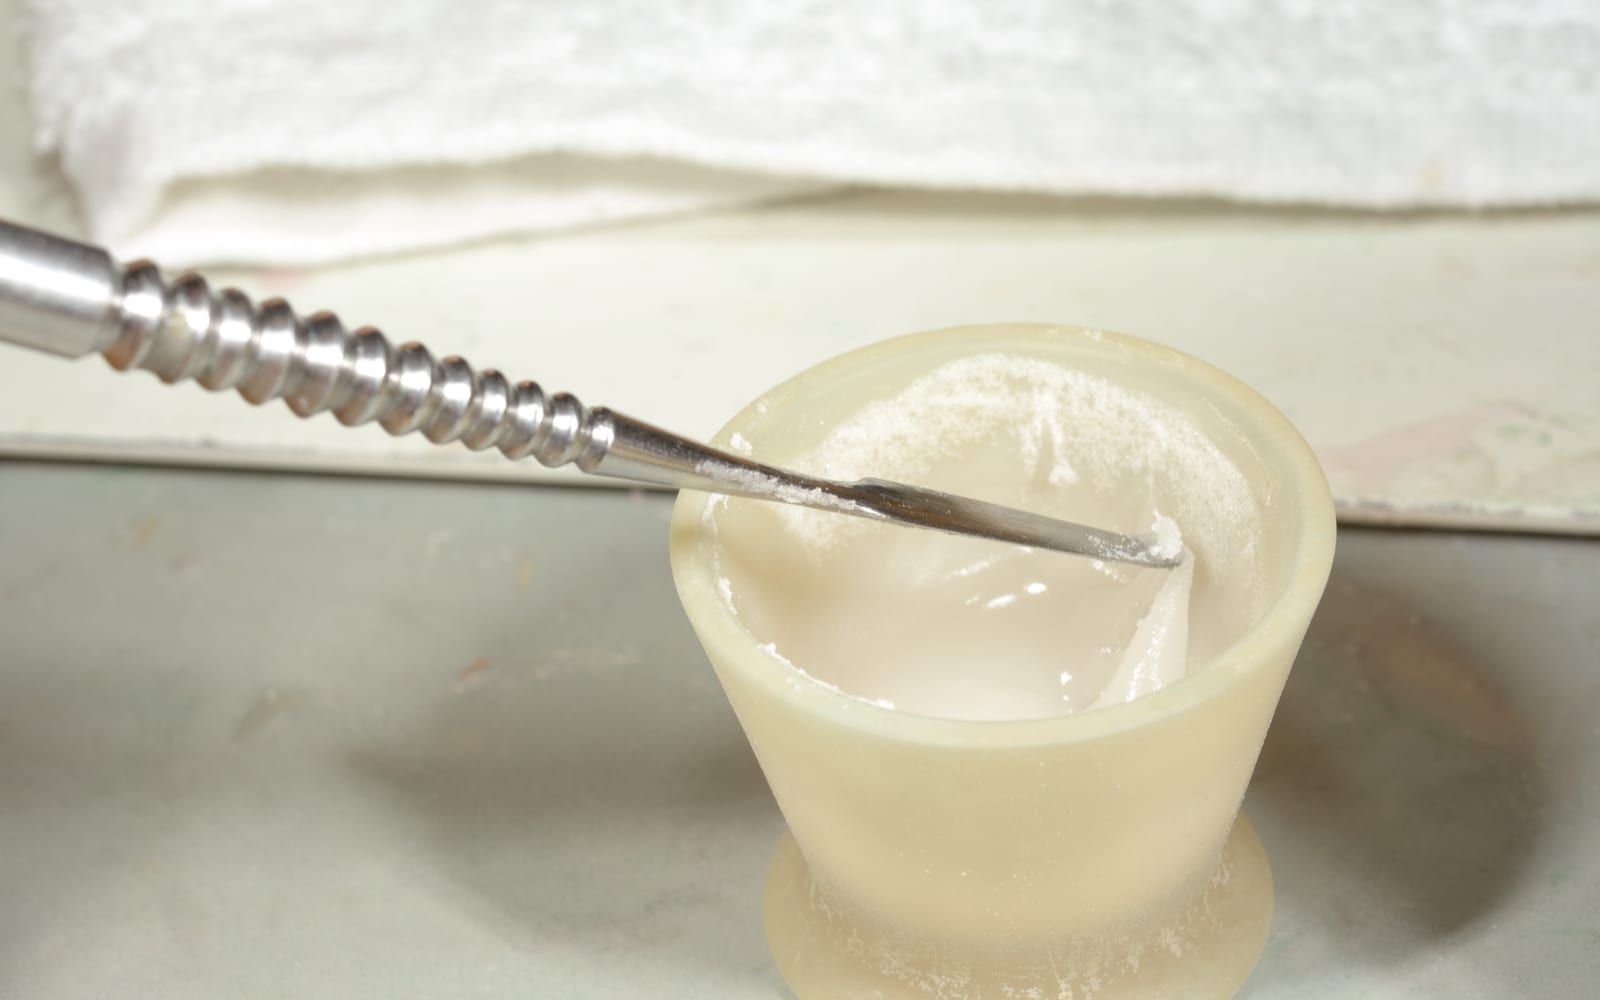 Tub of Dental Acrylic Resin